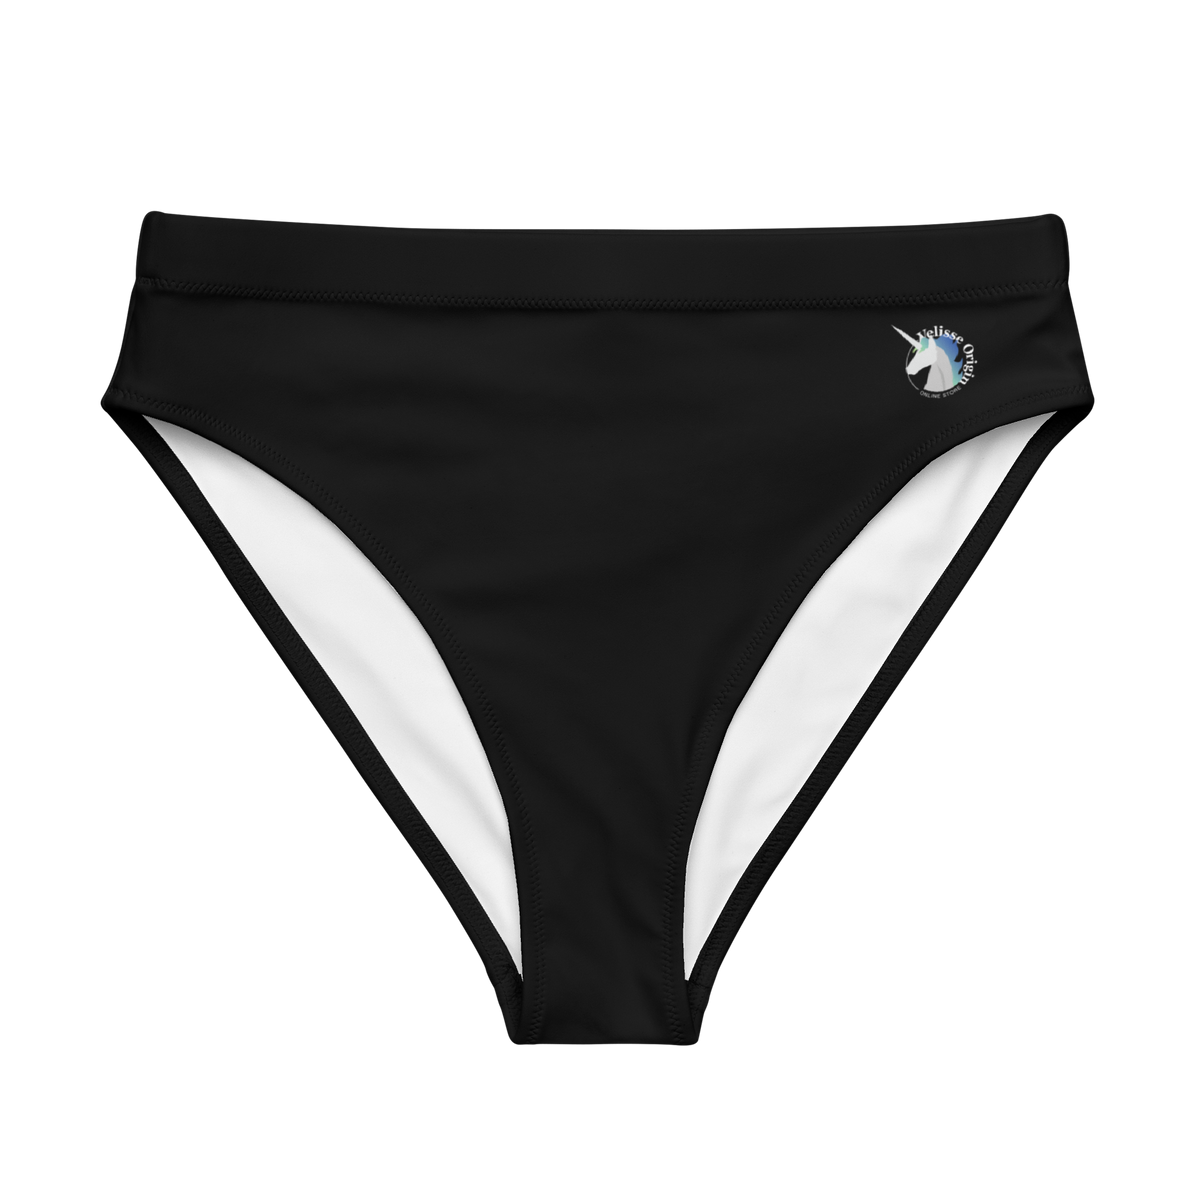 Velisse Origin bikini bottom, high-waisted bikini bottom, black bikini bottom, unicorn, simple bikini